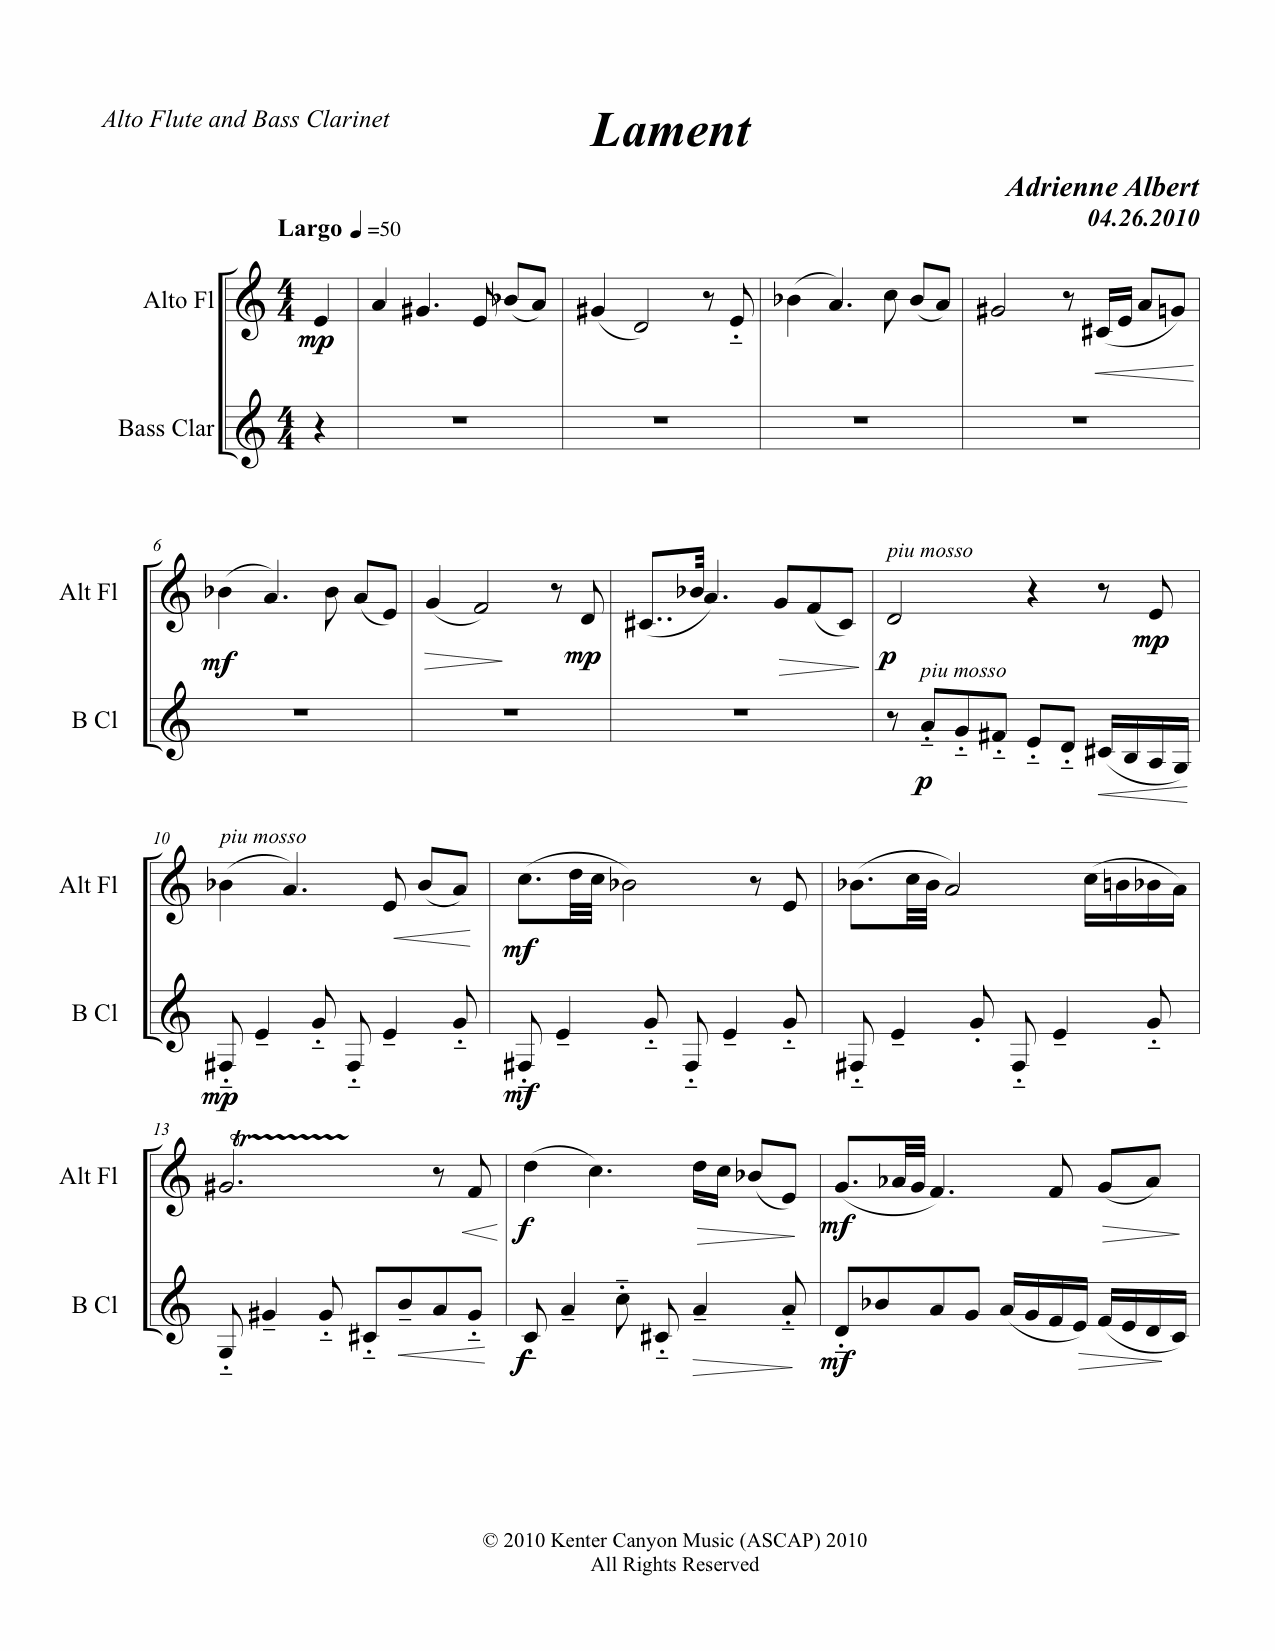 Menage a Trio Lament Example Score Image